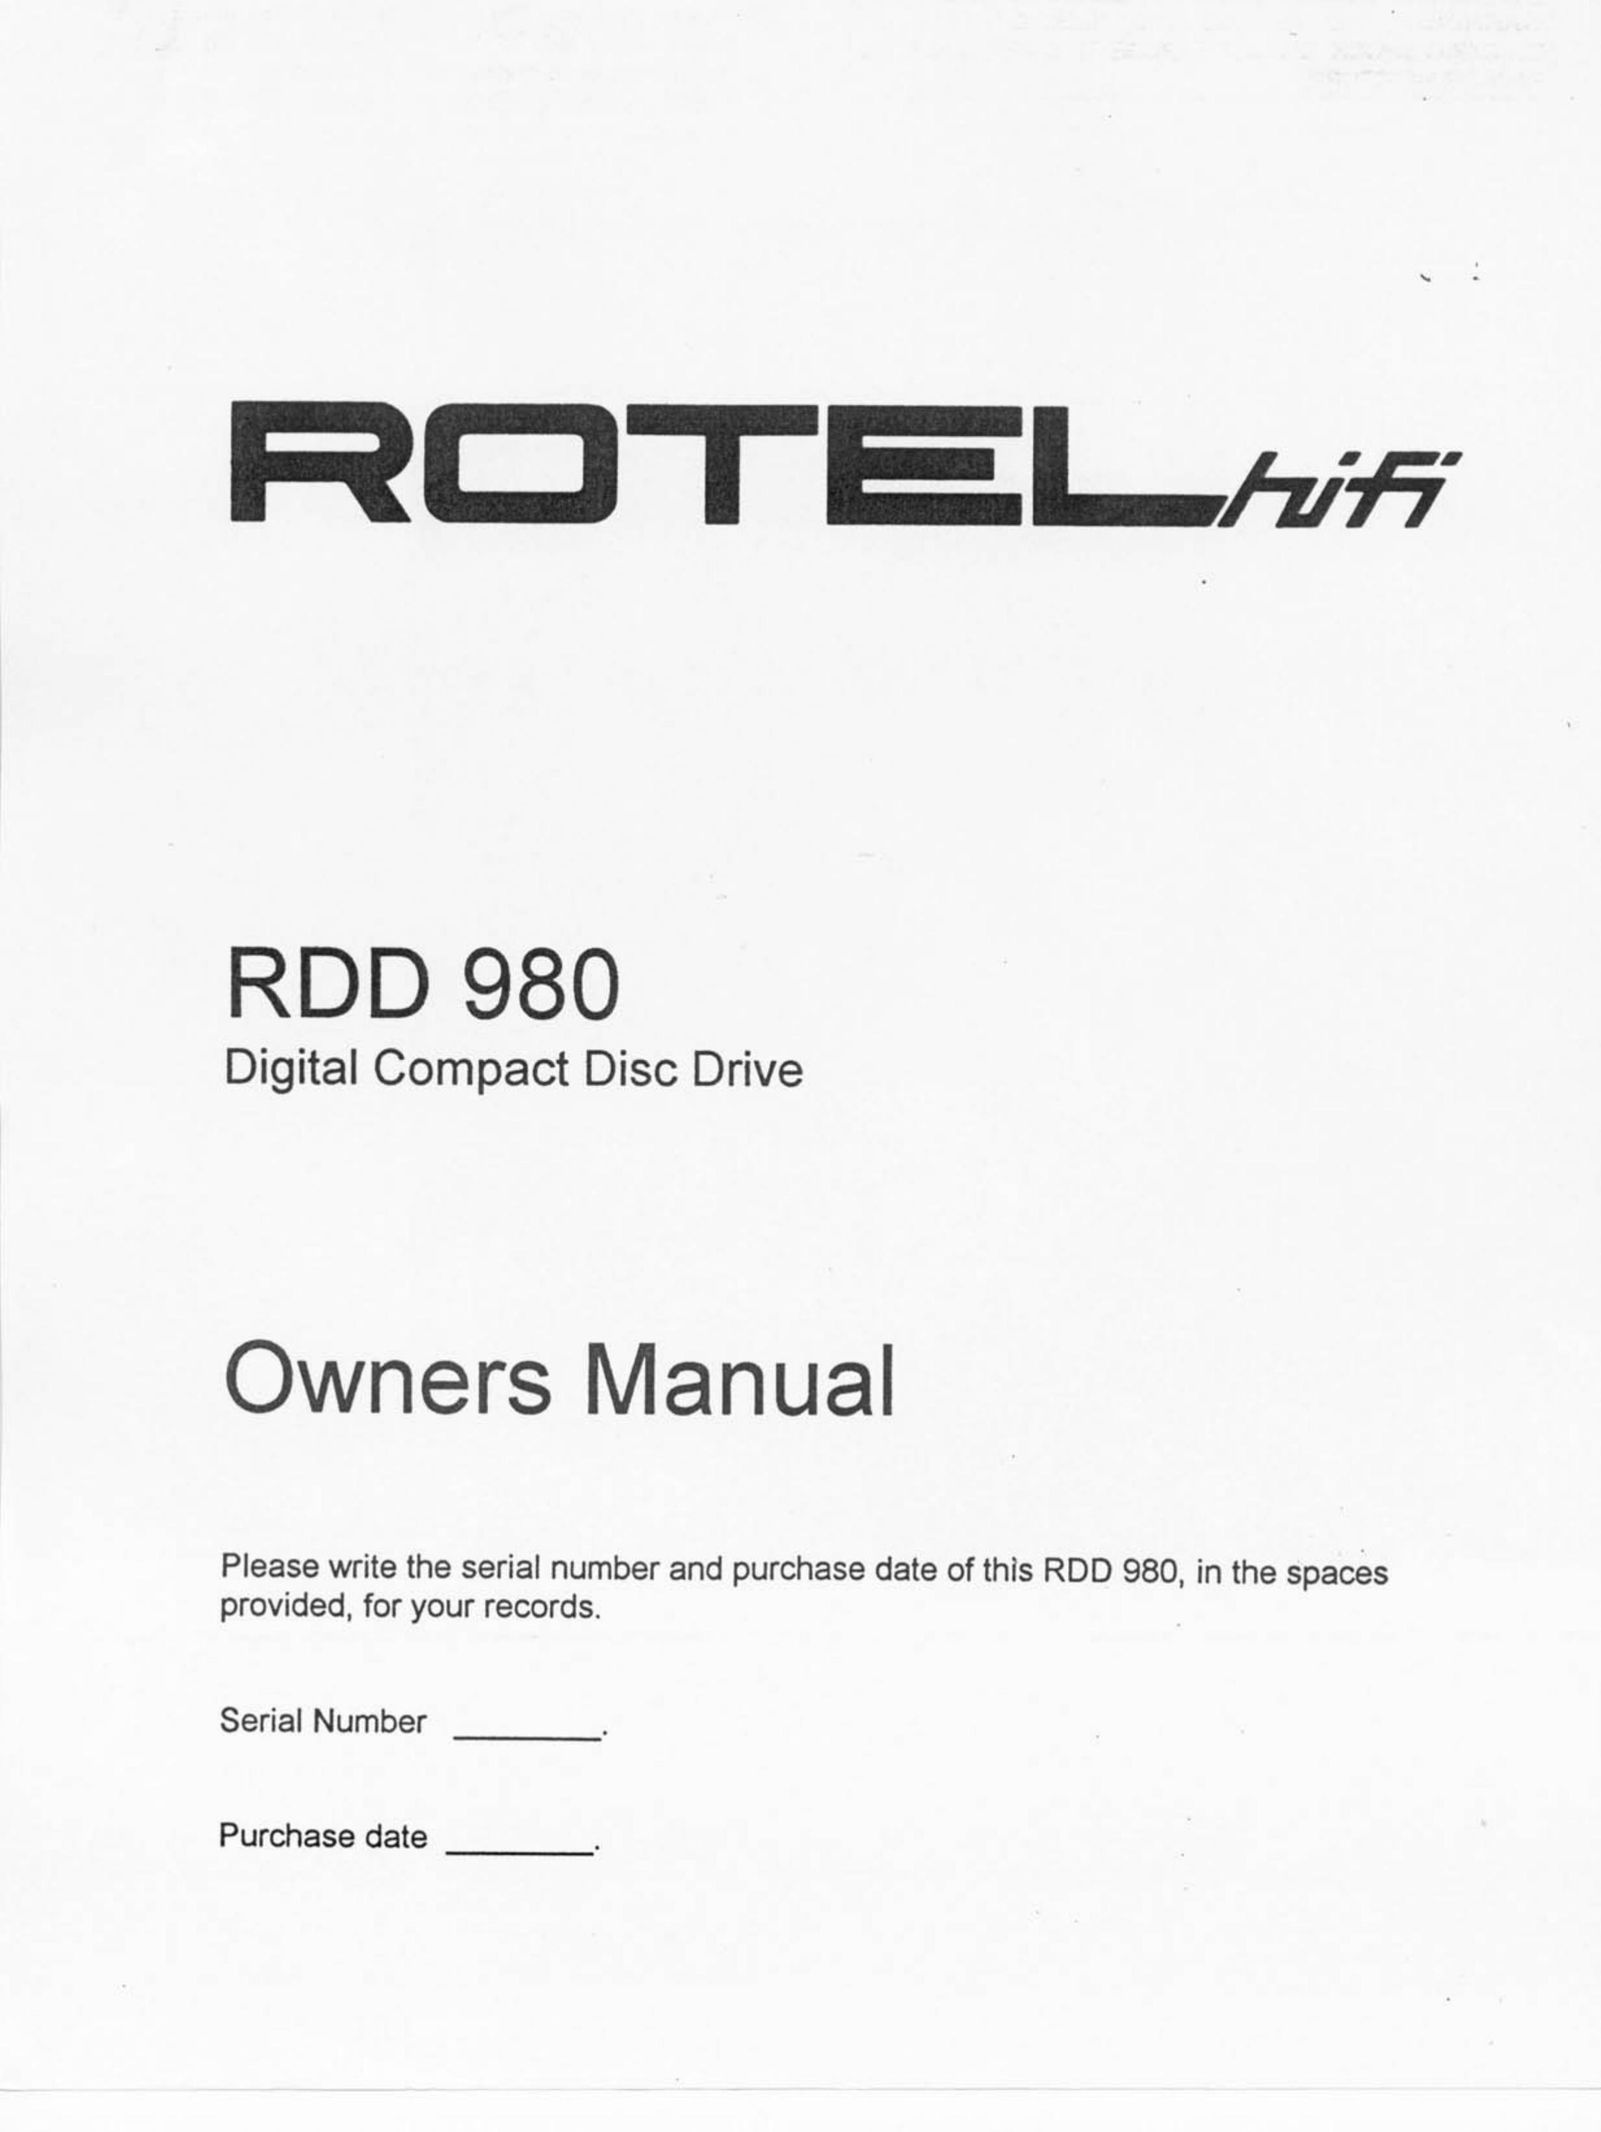 Rotel RDD 980 Computer Drive User Manual